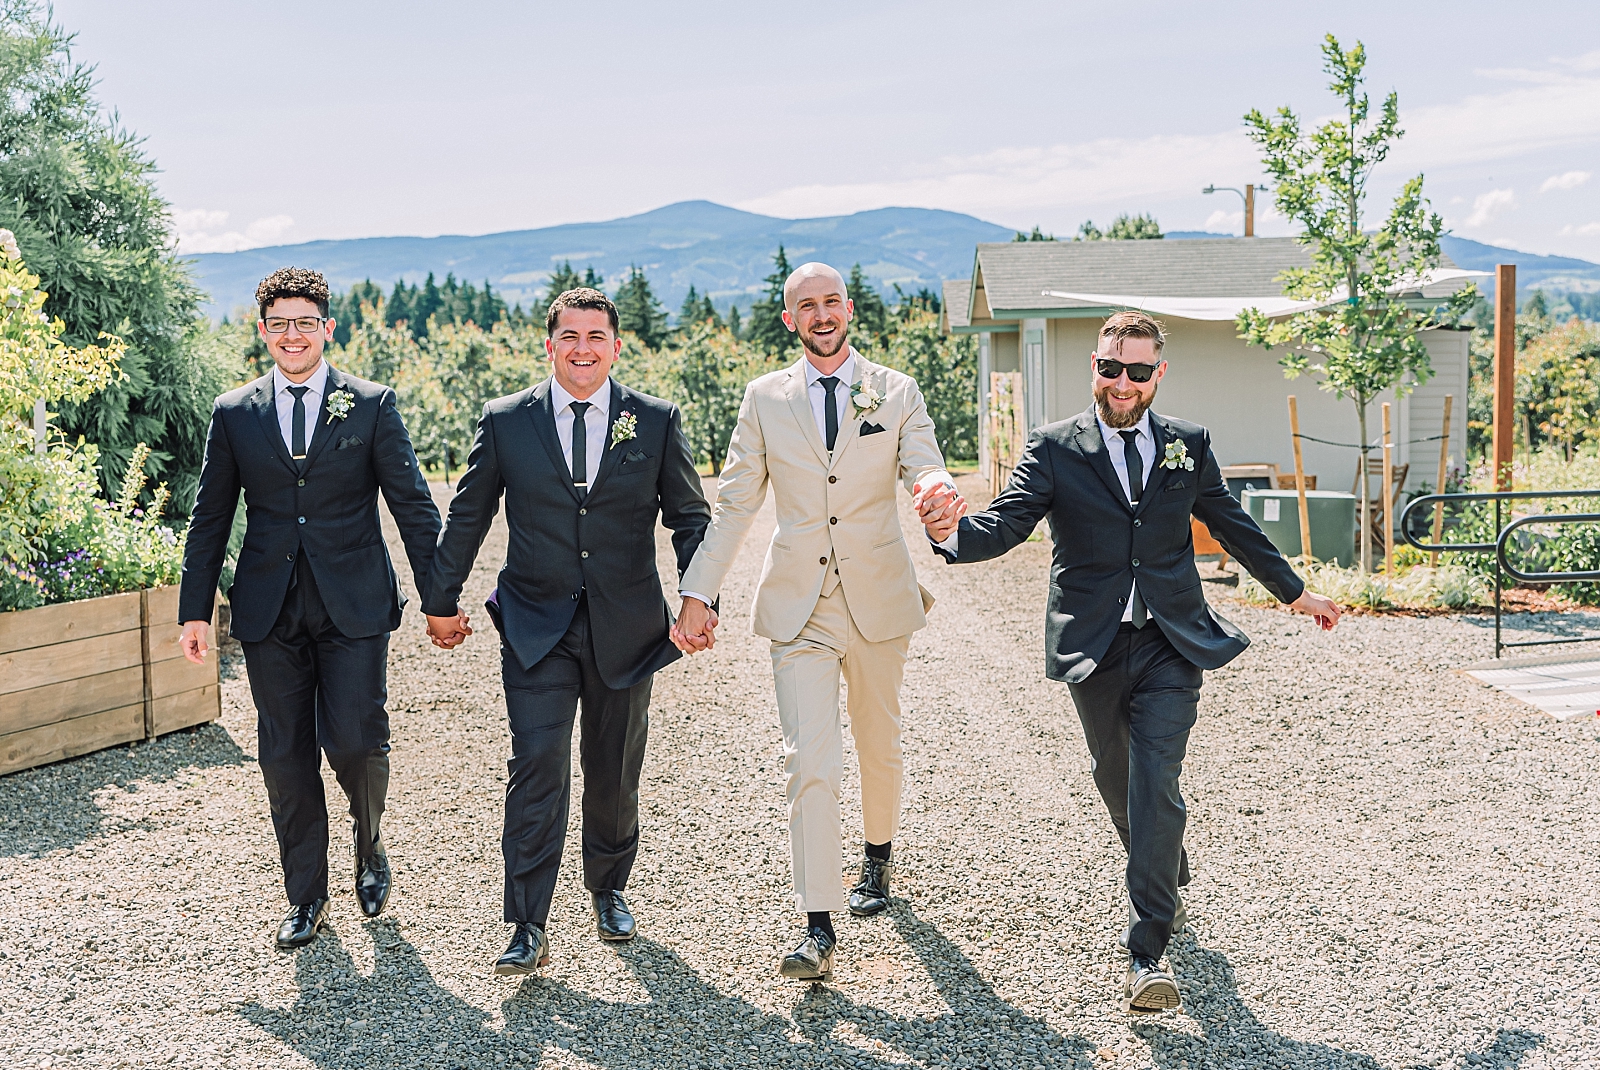 wedding day groomsmen poses, groomsmen walking together